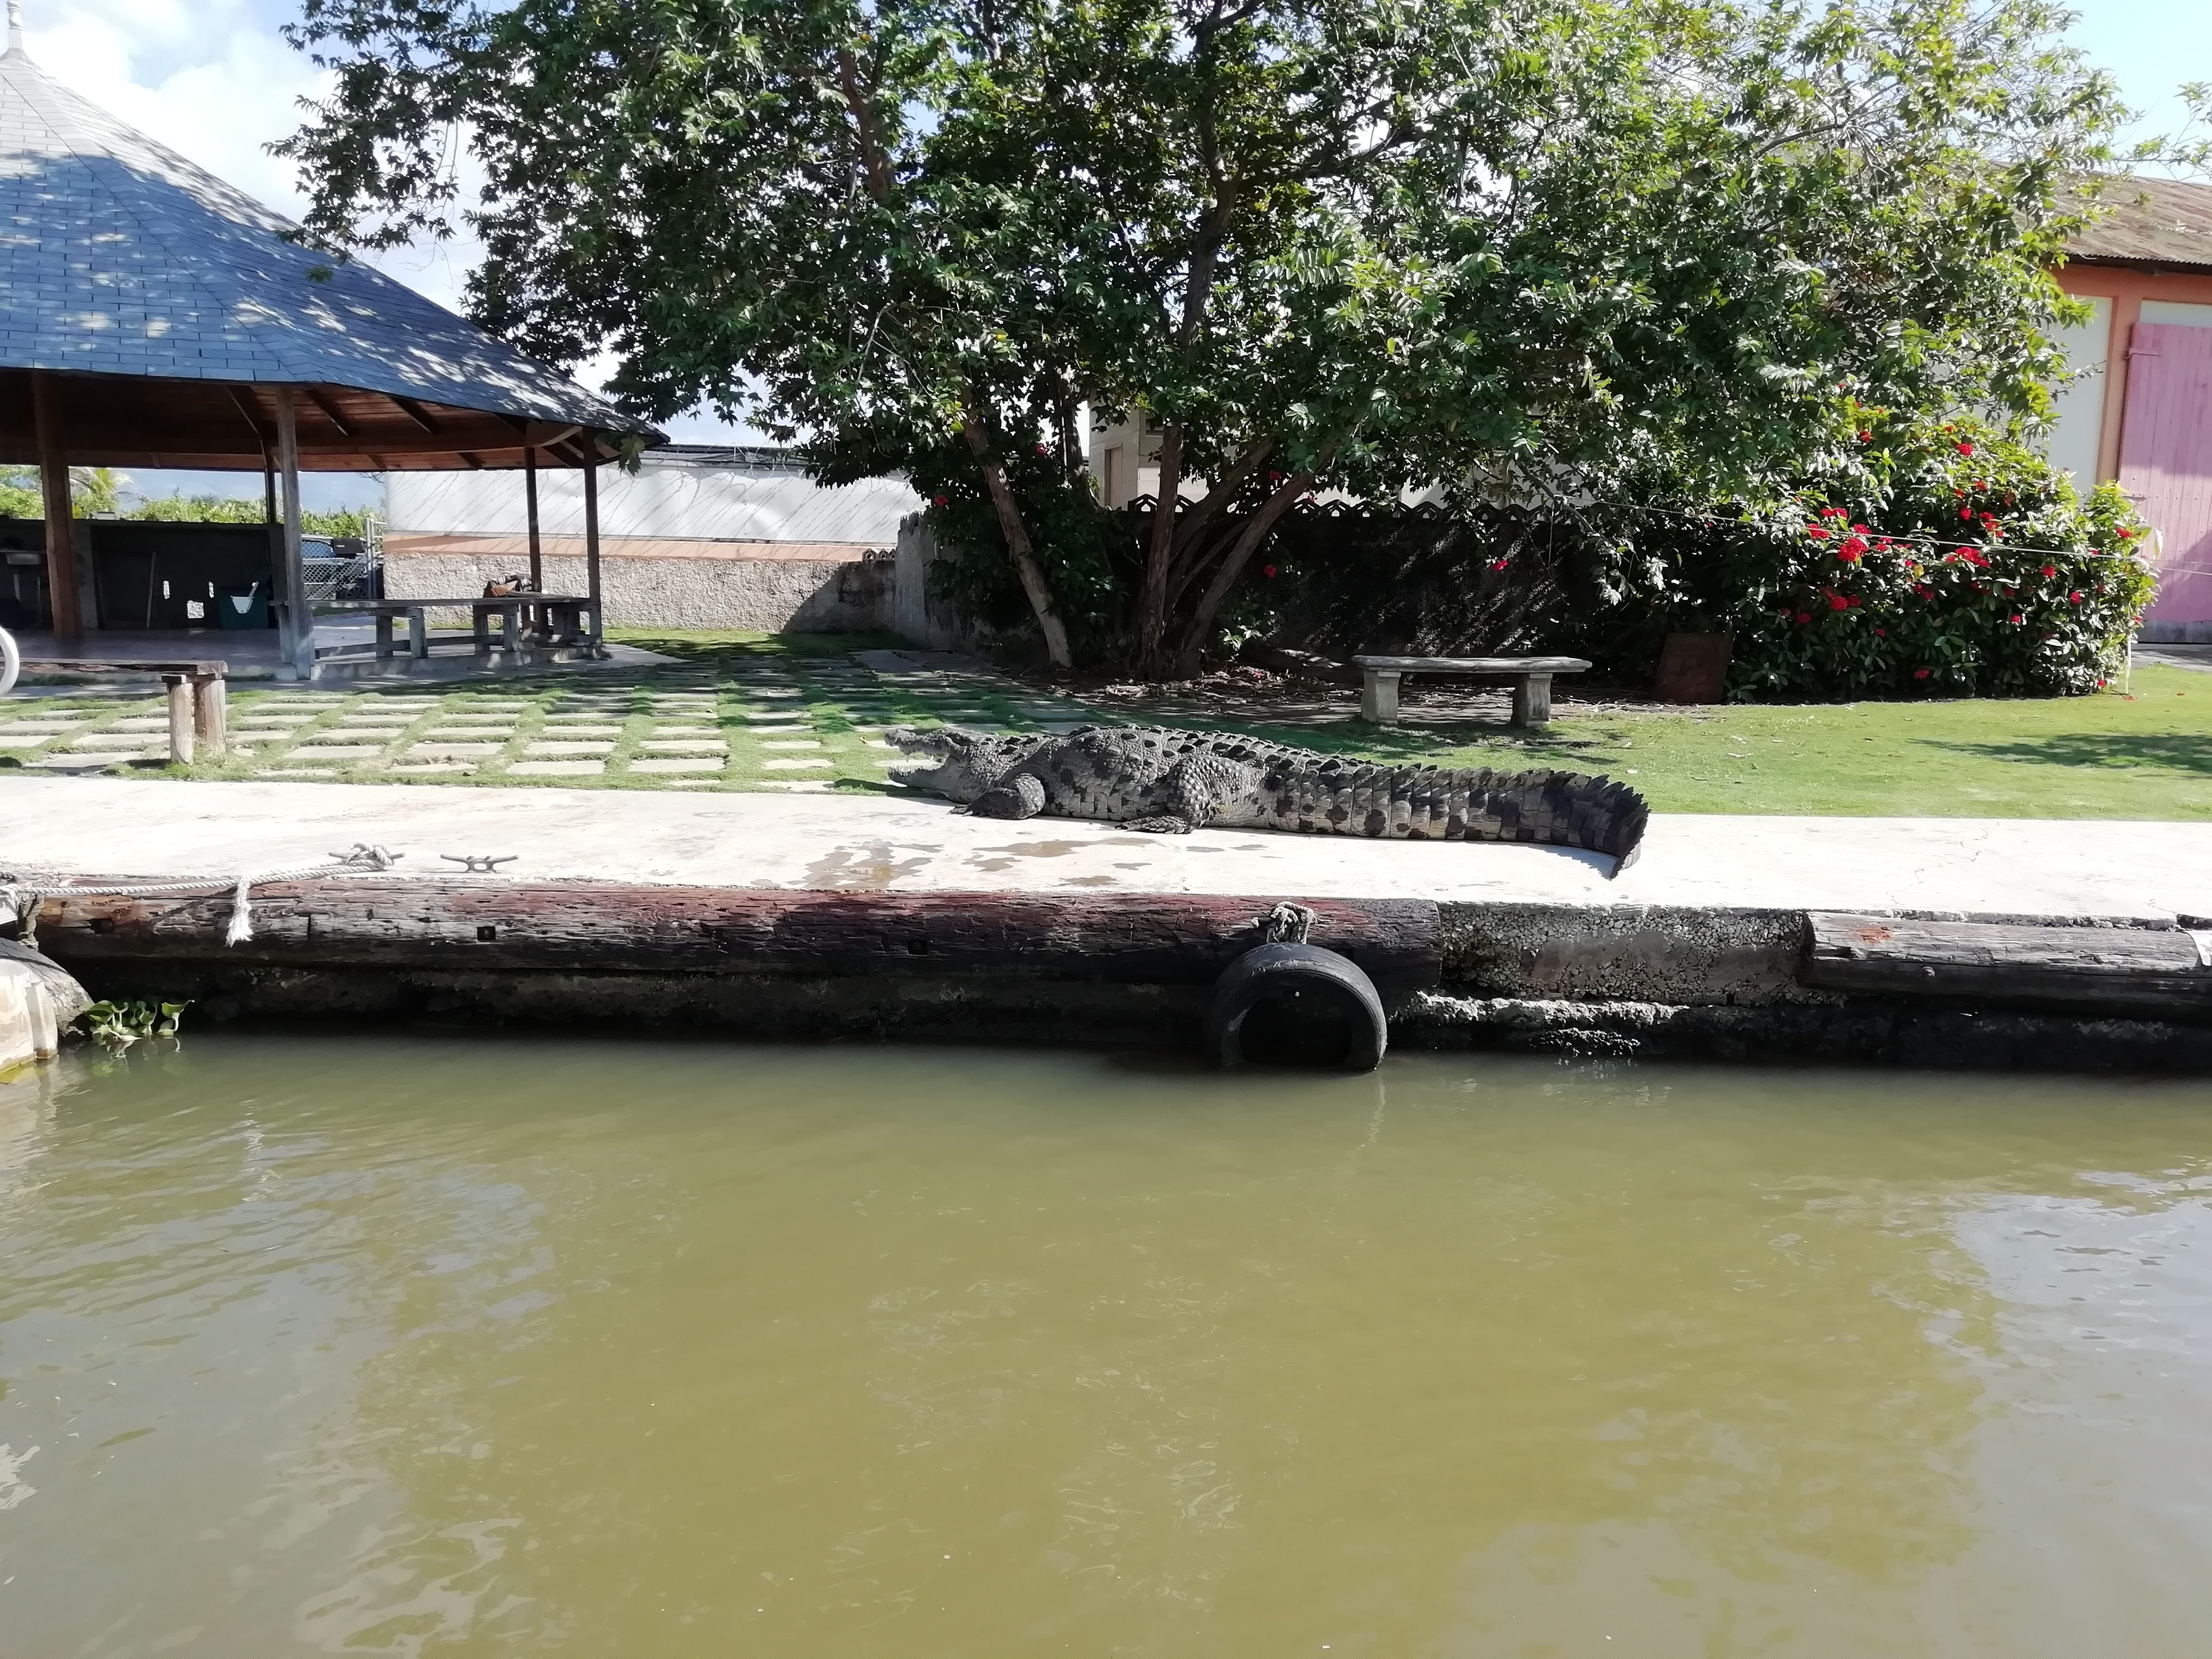 Krokodil Terence beim Sonnenbaden am Bootanleger zur Black River Safari